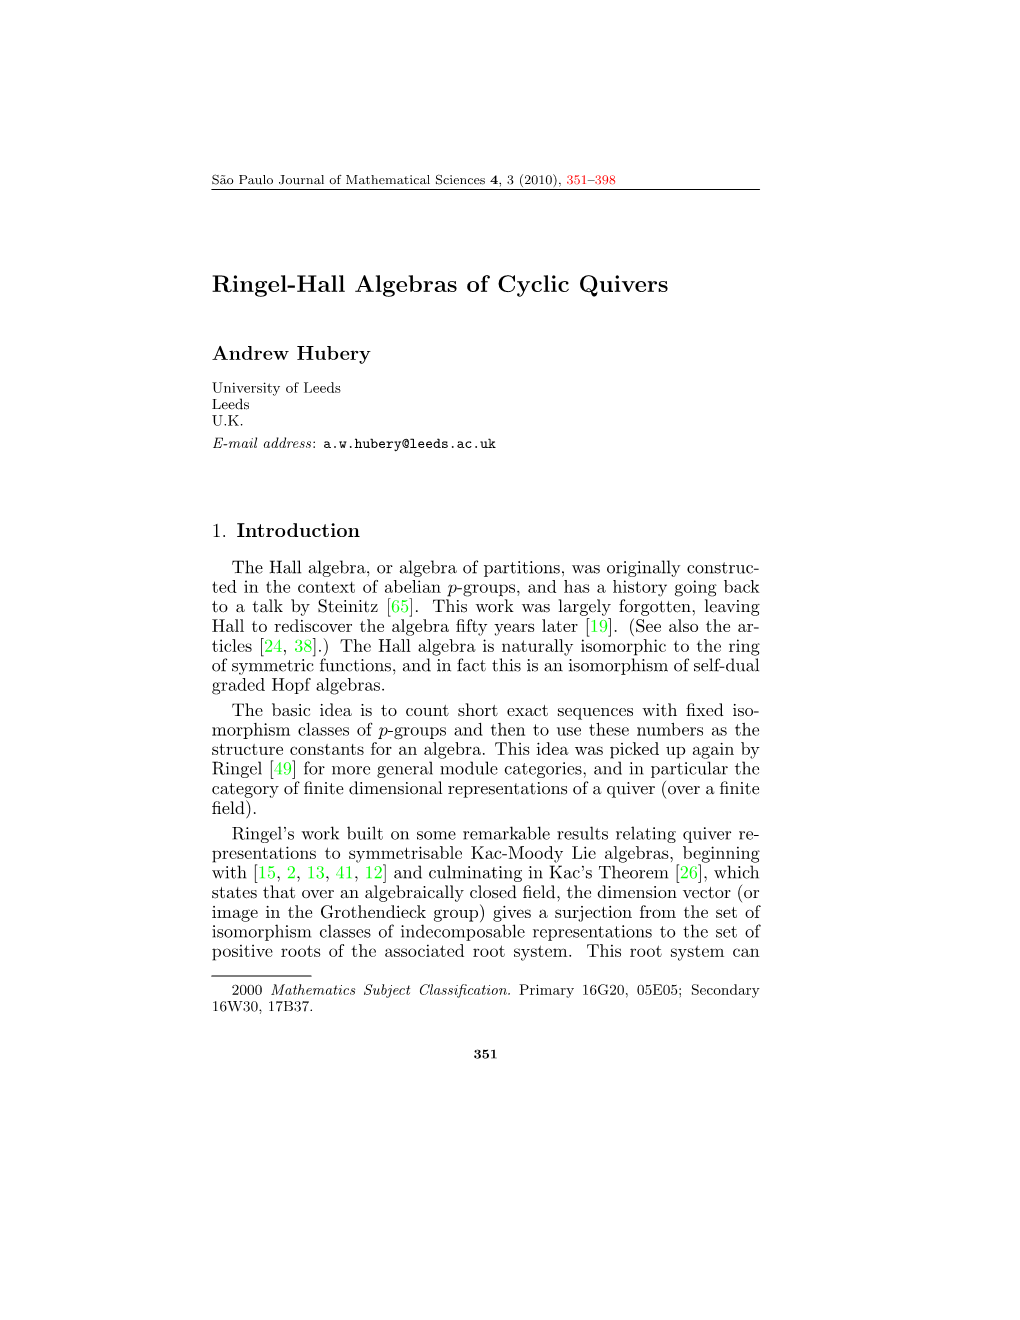 Ringel-Hall Algebras of Cyclic Quivers